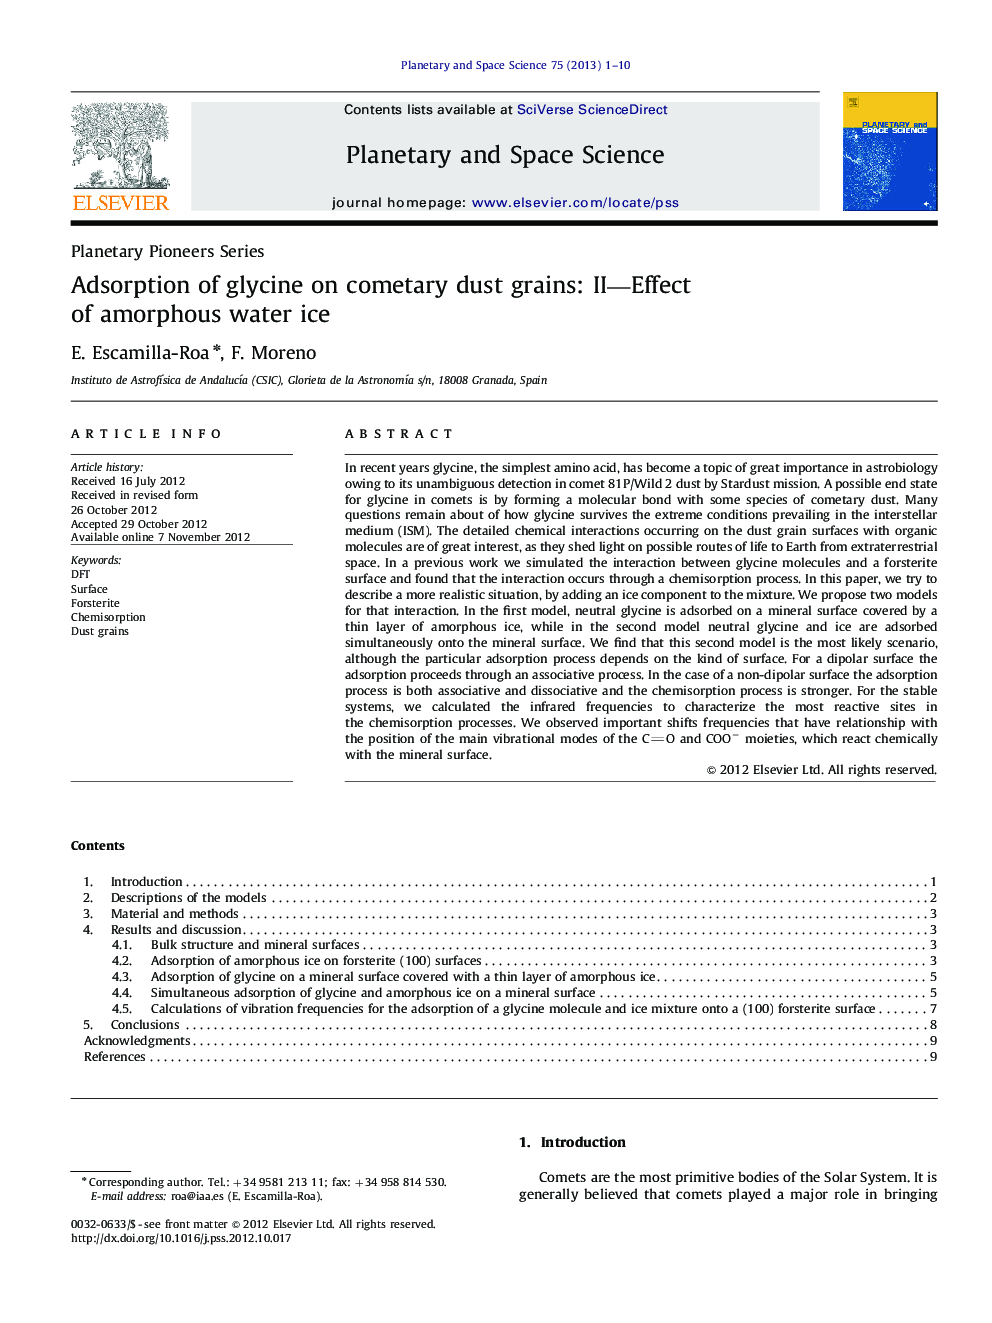 Adsorption of glycine on cometary dust grains: II—Effect of amorphous water ice